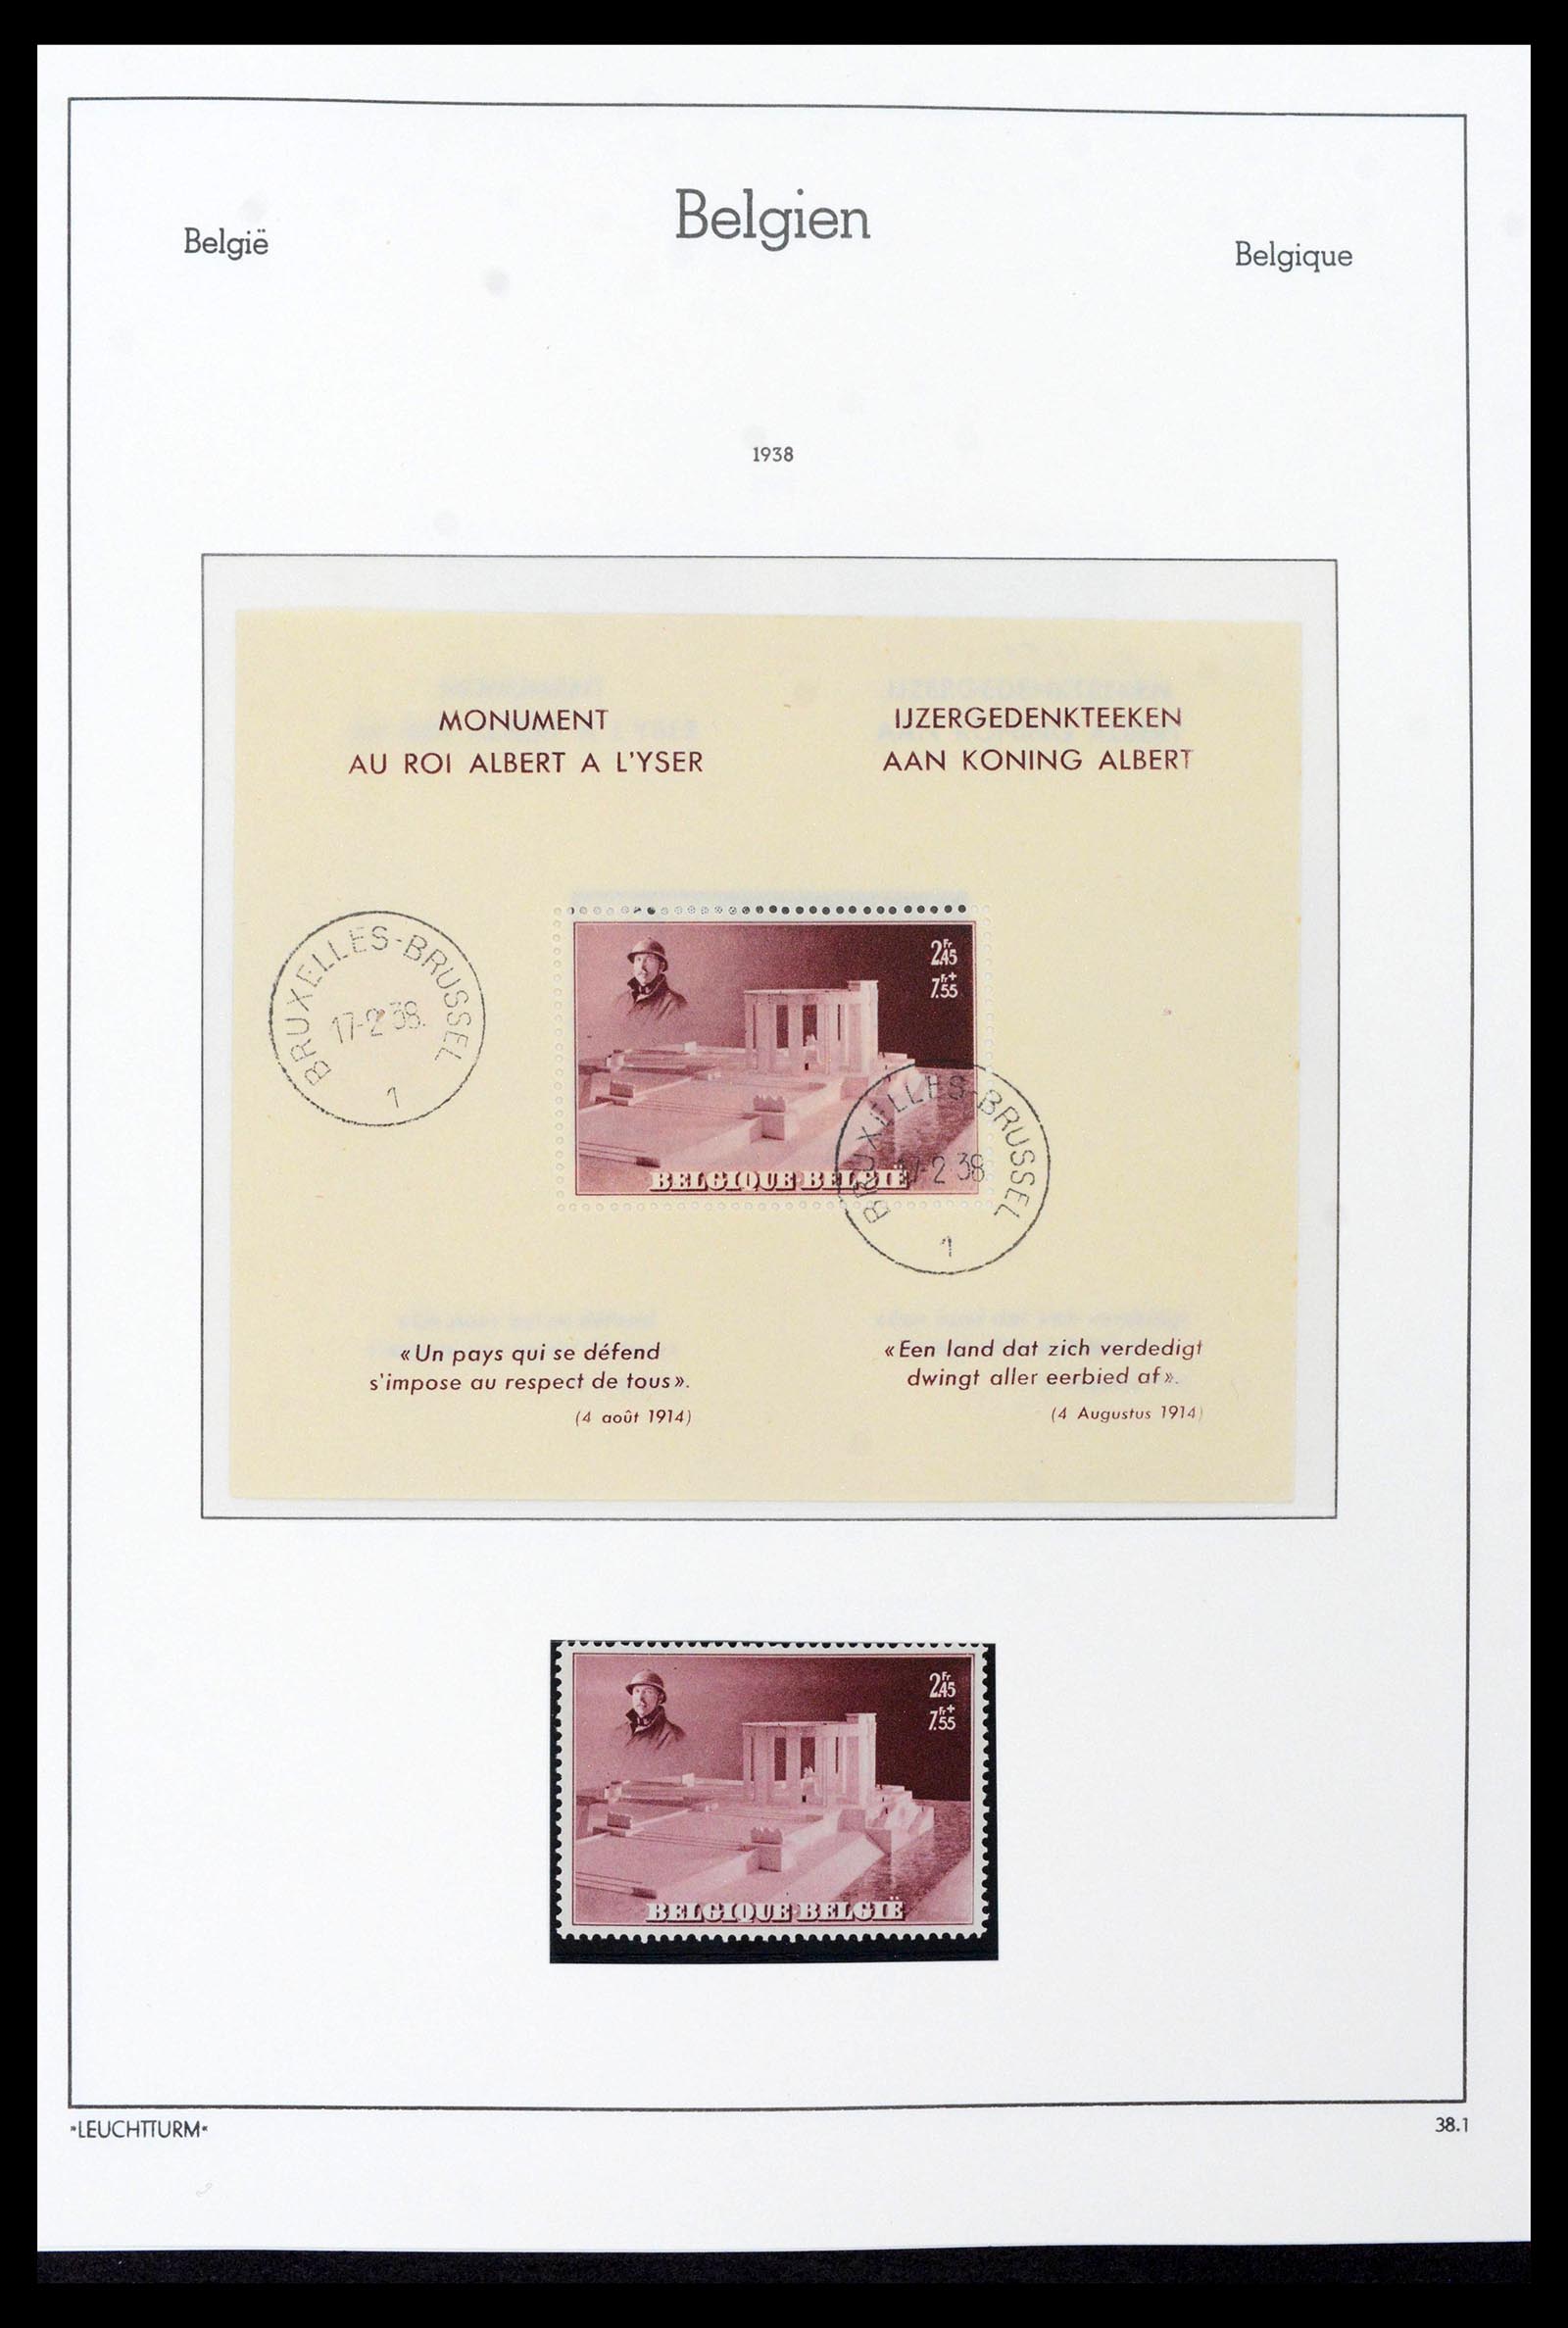 39137 0065 - Stamp collection 39137 Belgium 1849-2002.